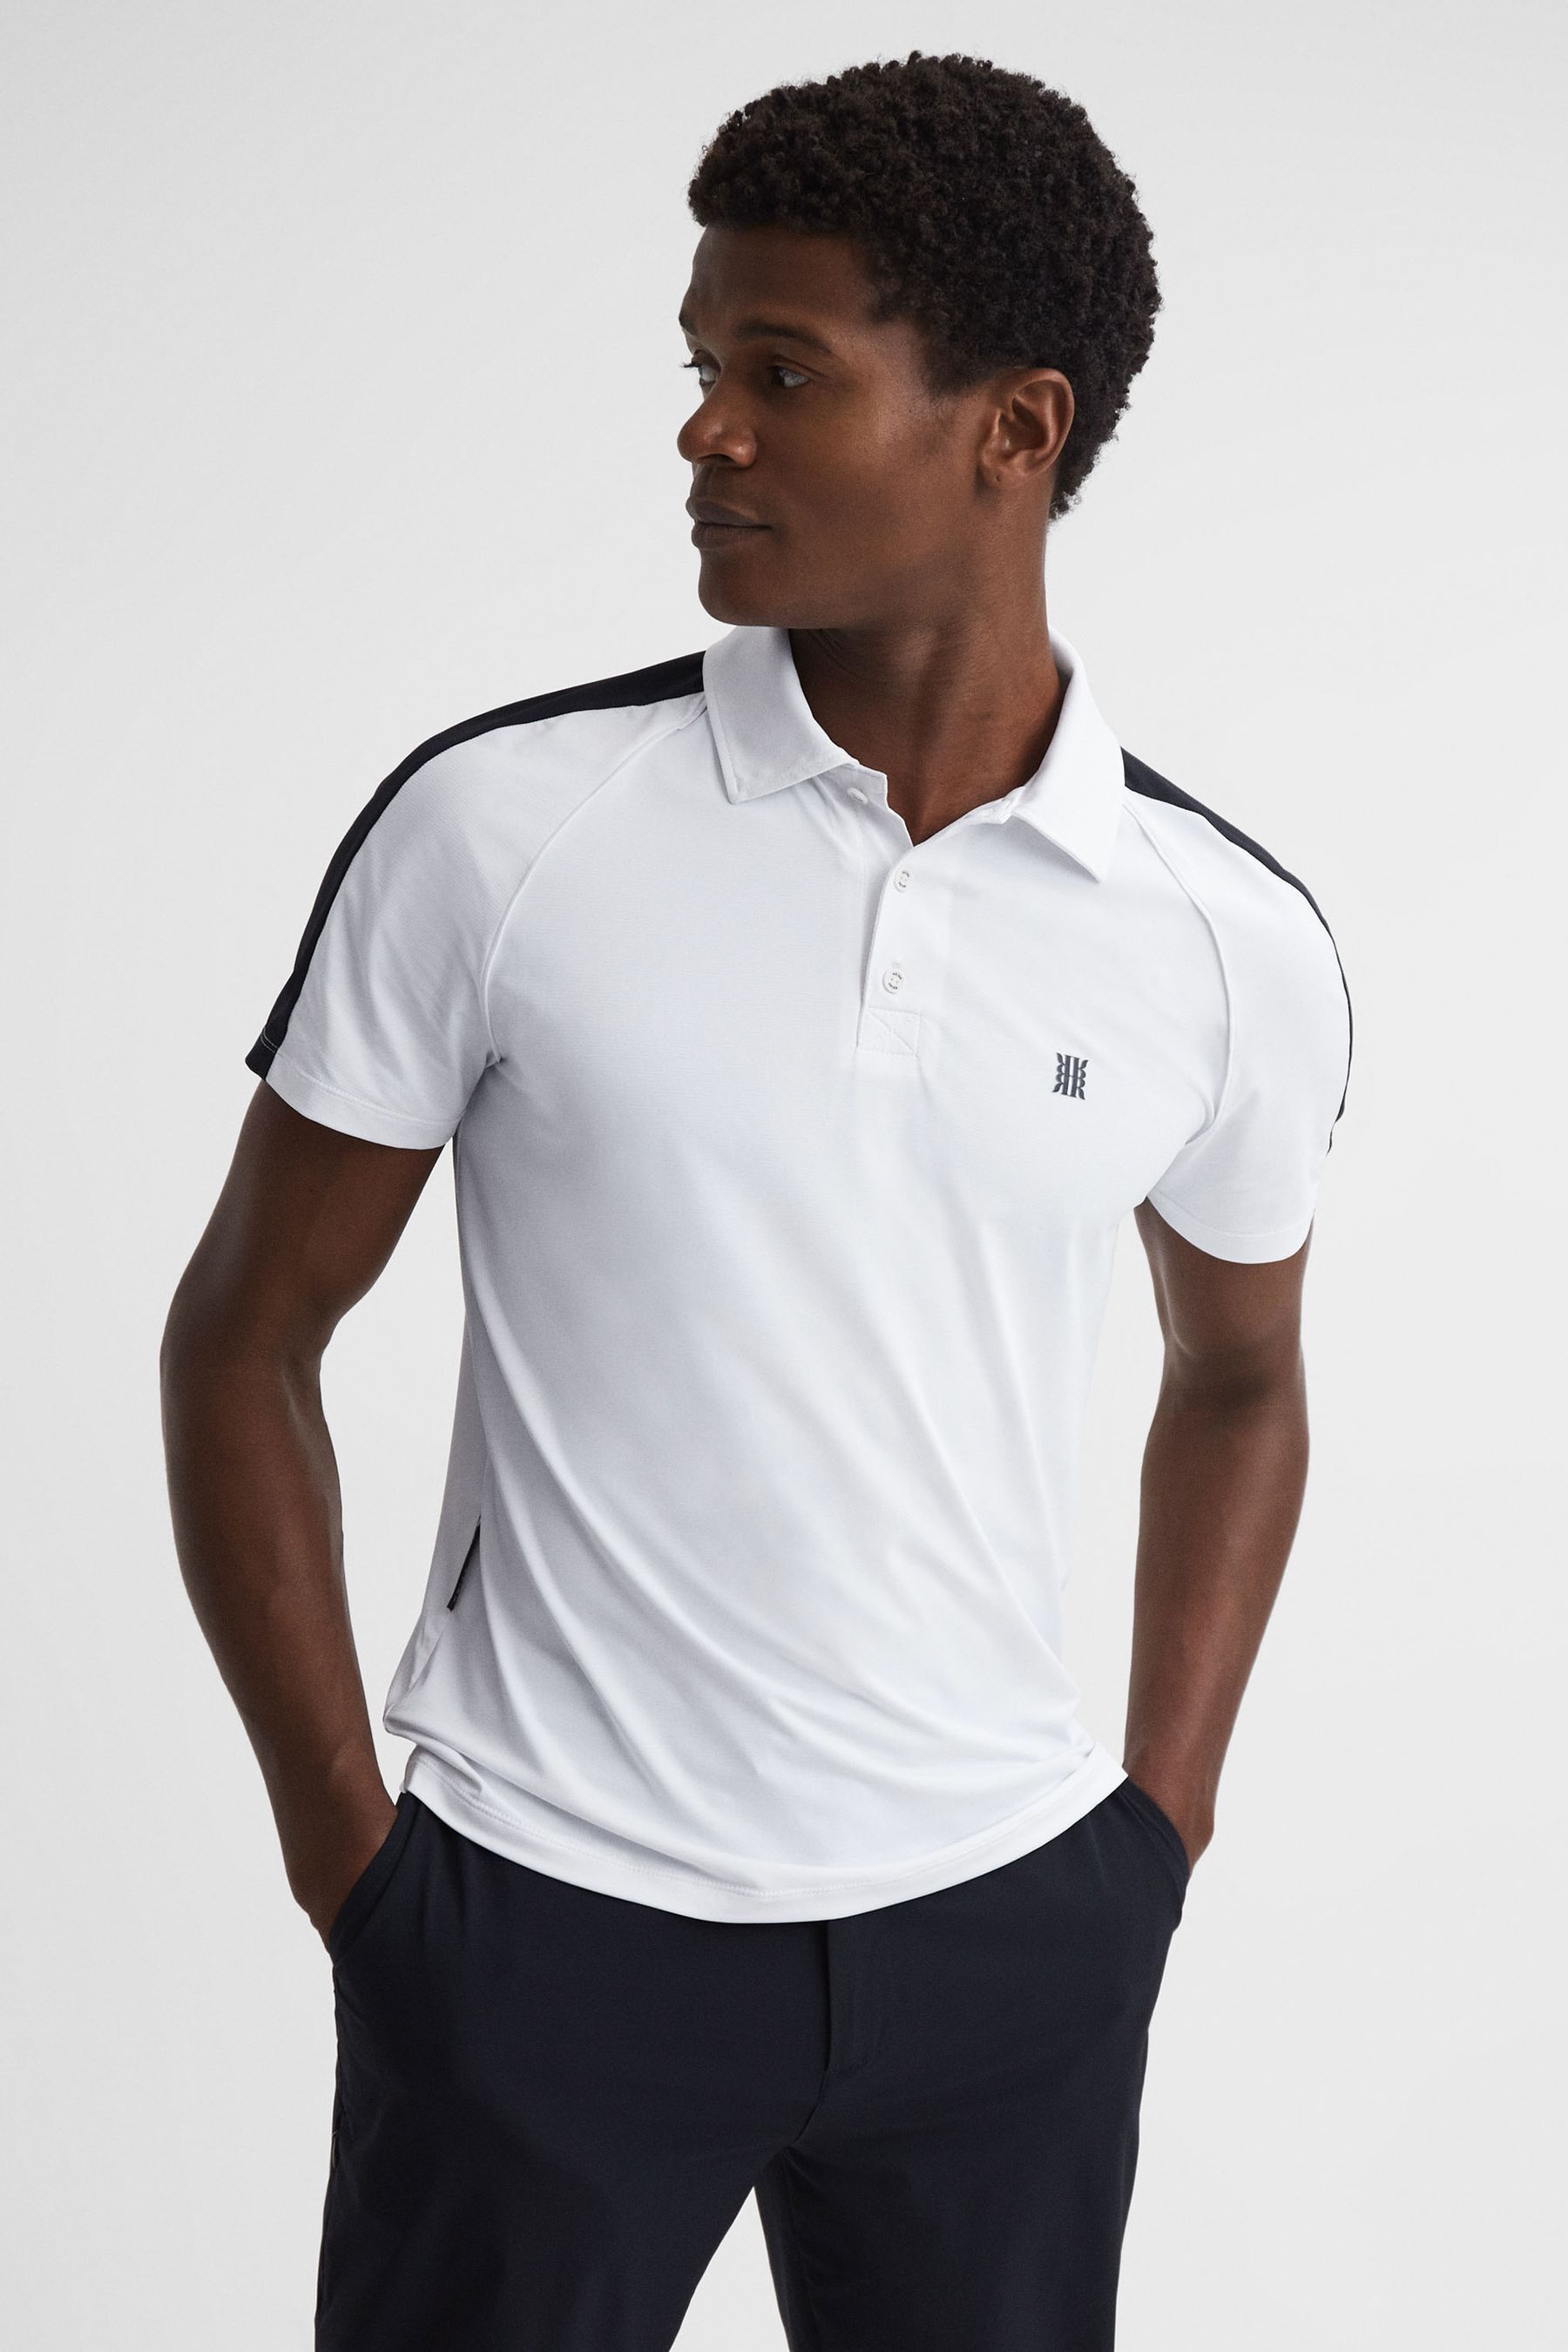 Reiss Camberley - White/navy Golf Airtech Slim Fit Polo Shirt, L